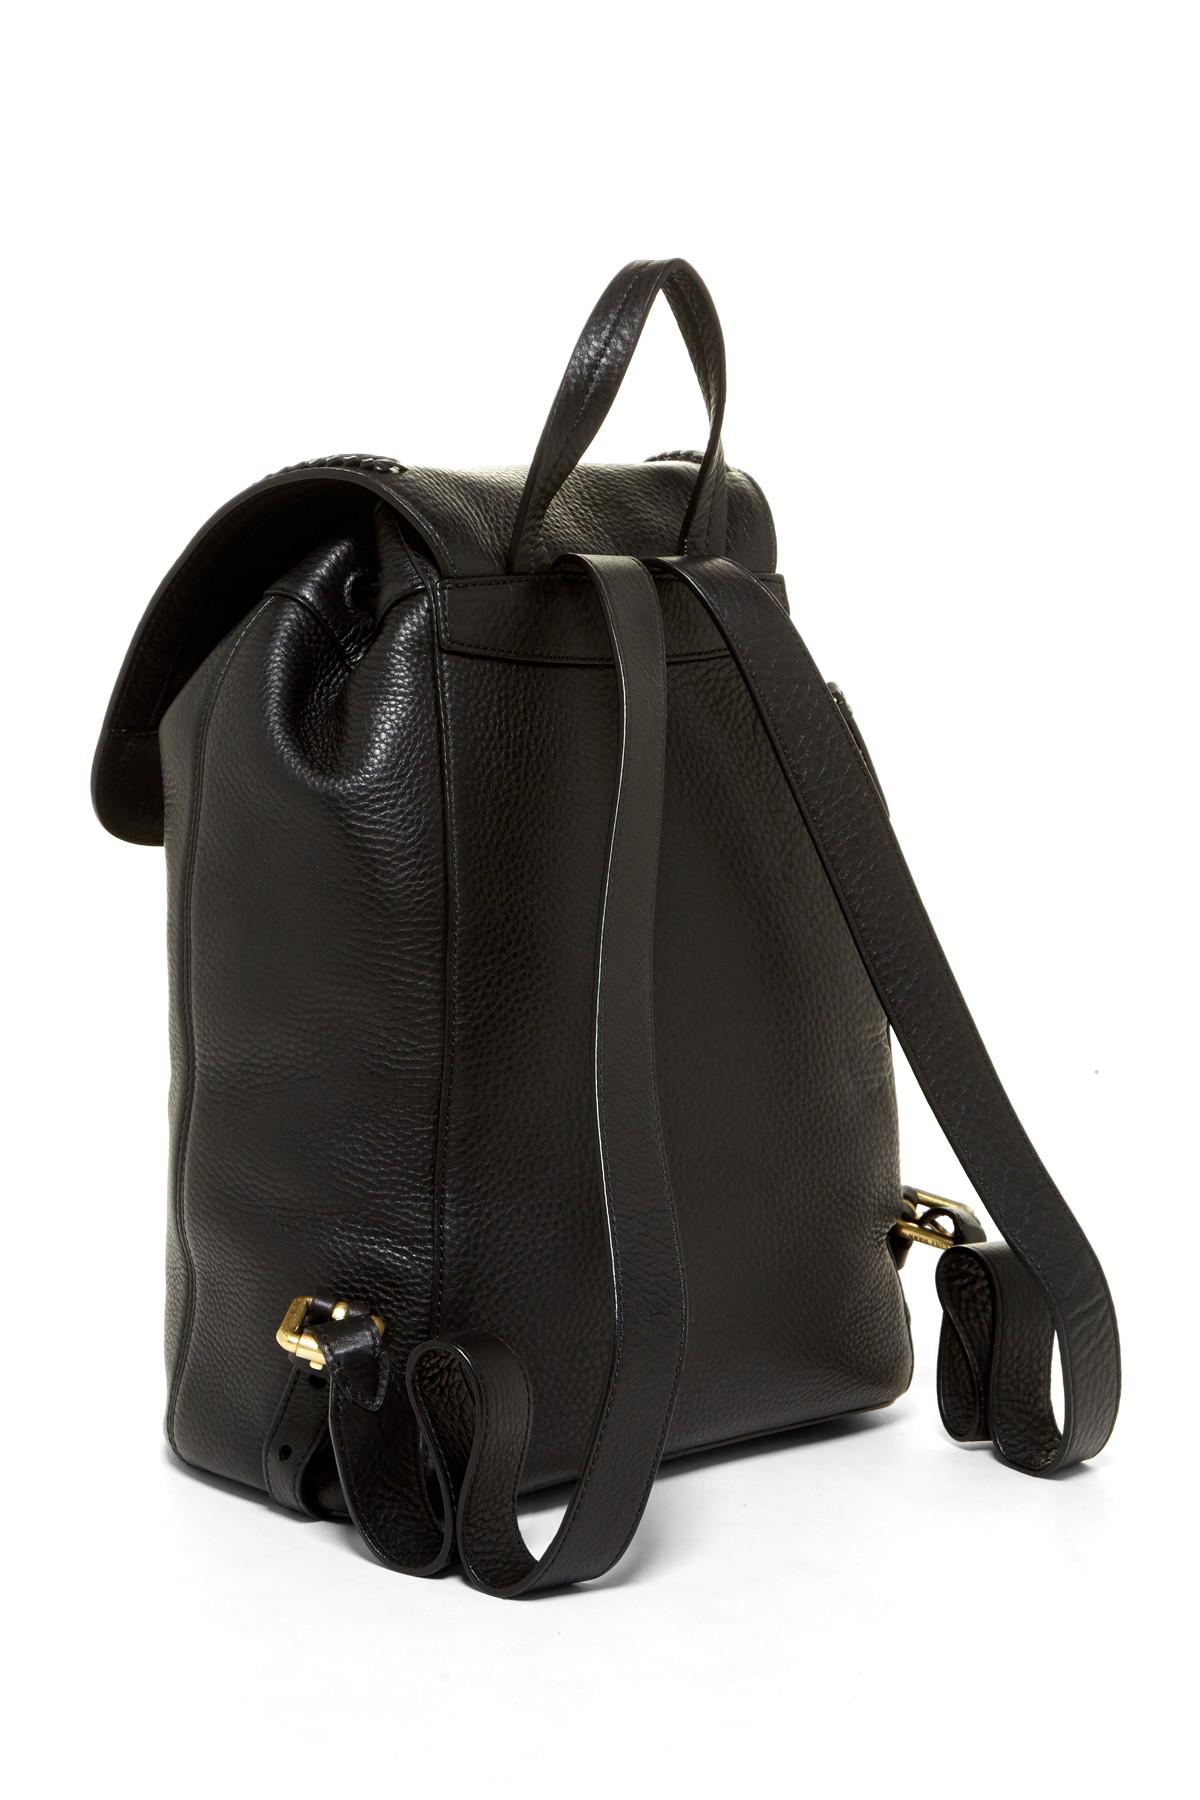 Lyst - Cole Haan Celia Leather Backpack in Black